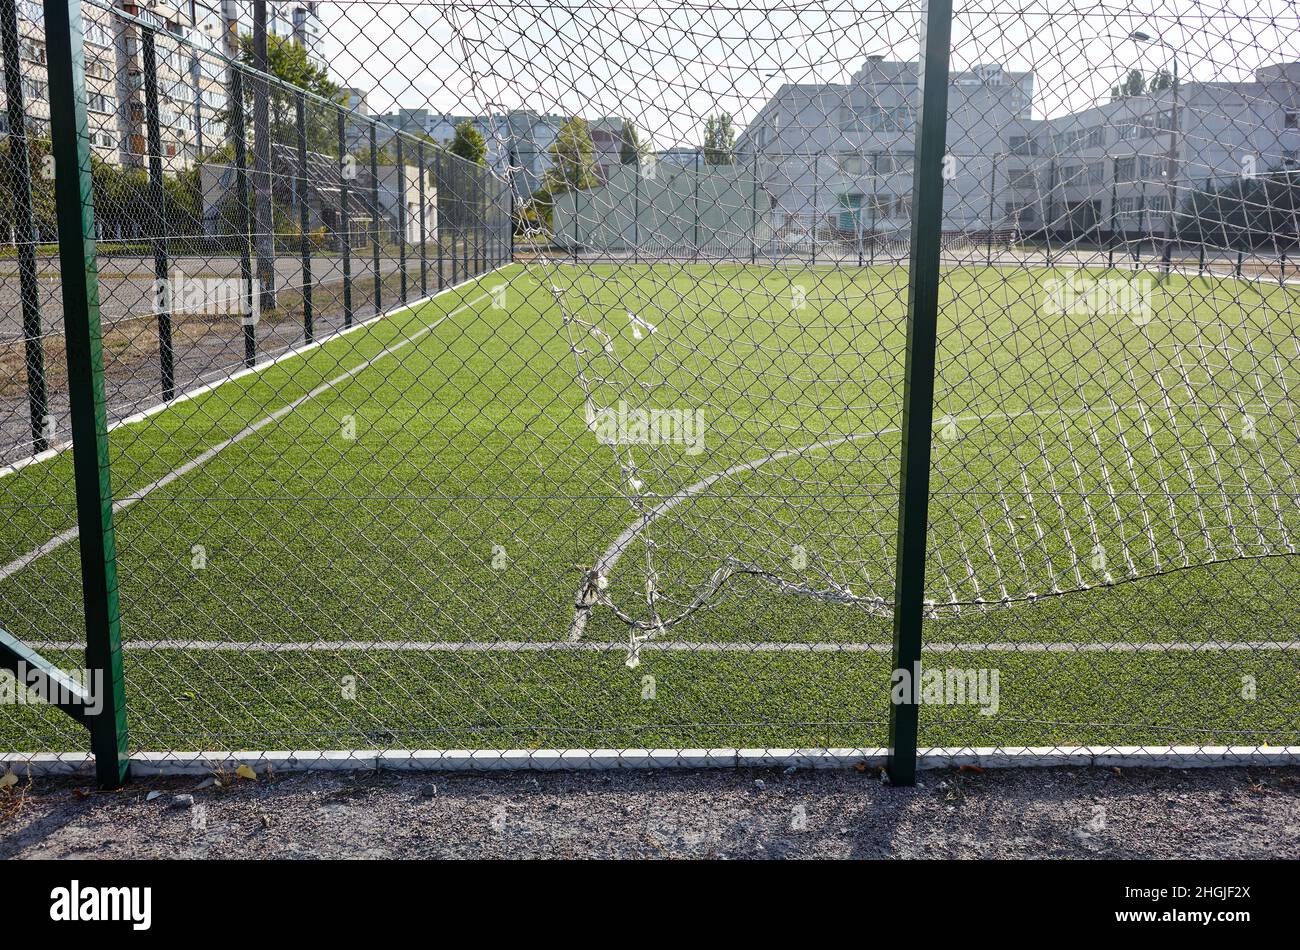 Malla de fútbol fotografías e imágenes de alta resolución - Alamy